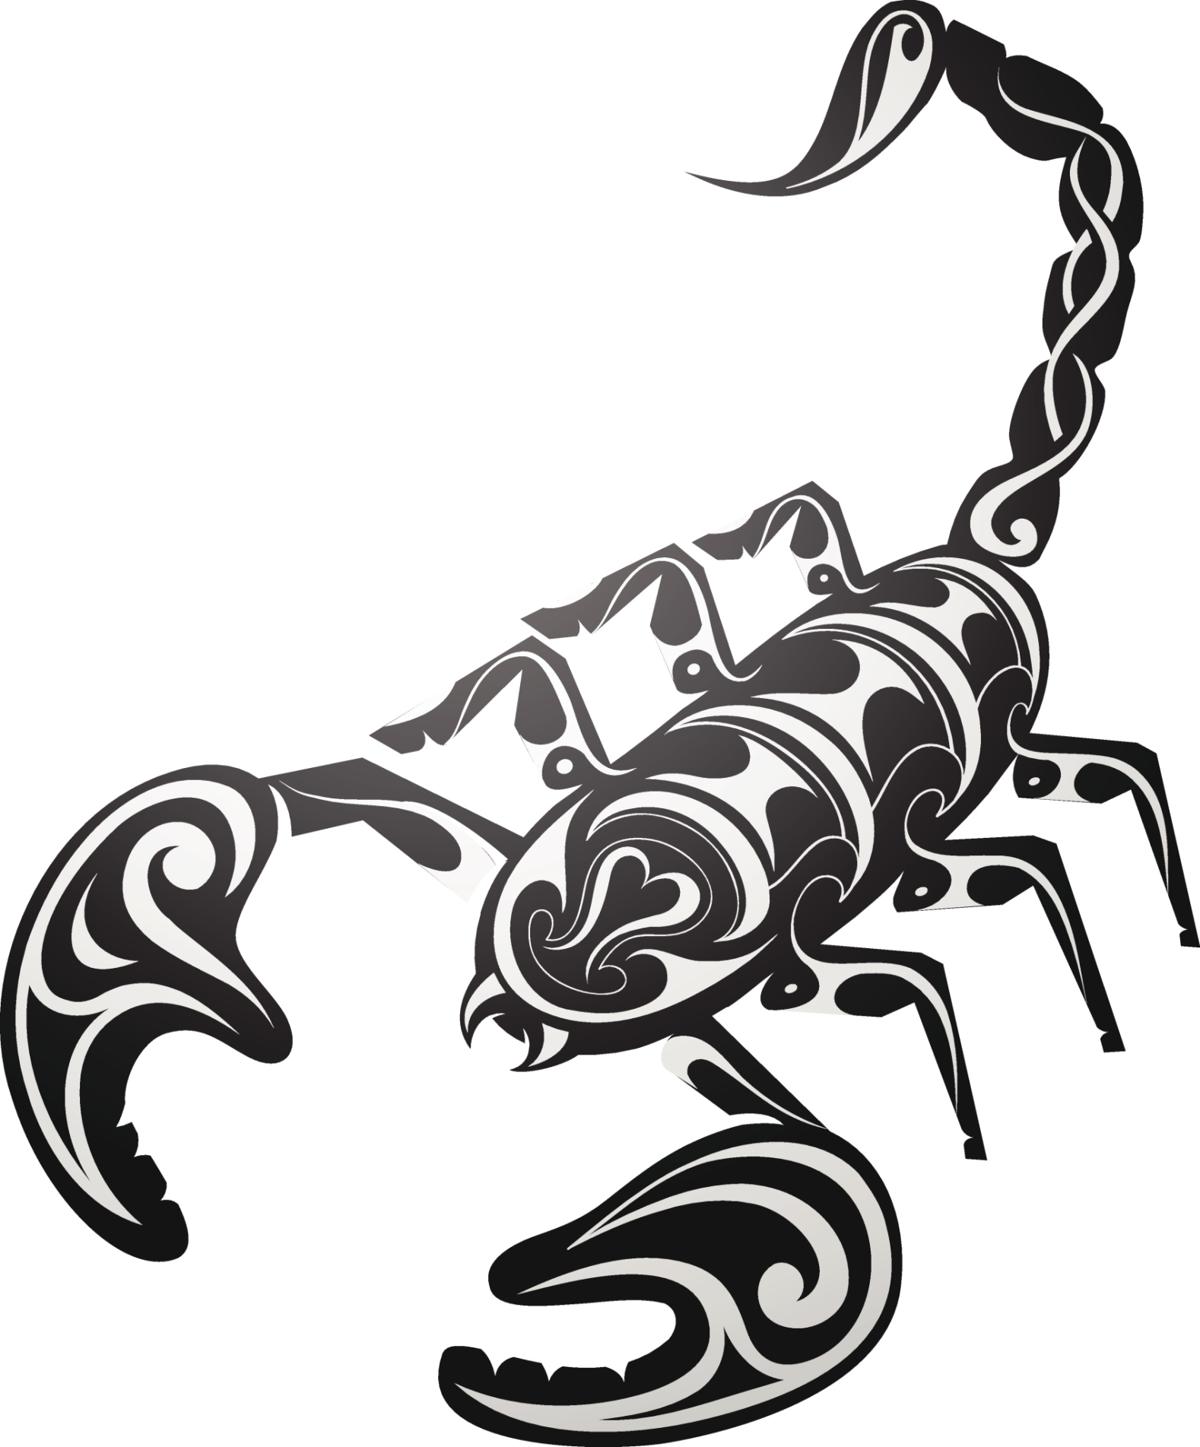 Majestic Tribal Scorpion Tattoos That Will Make Heads Turn